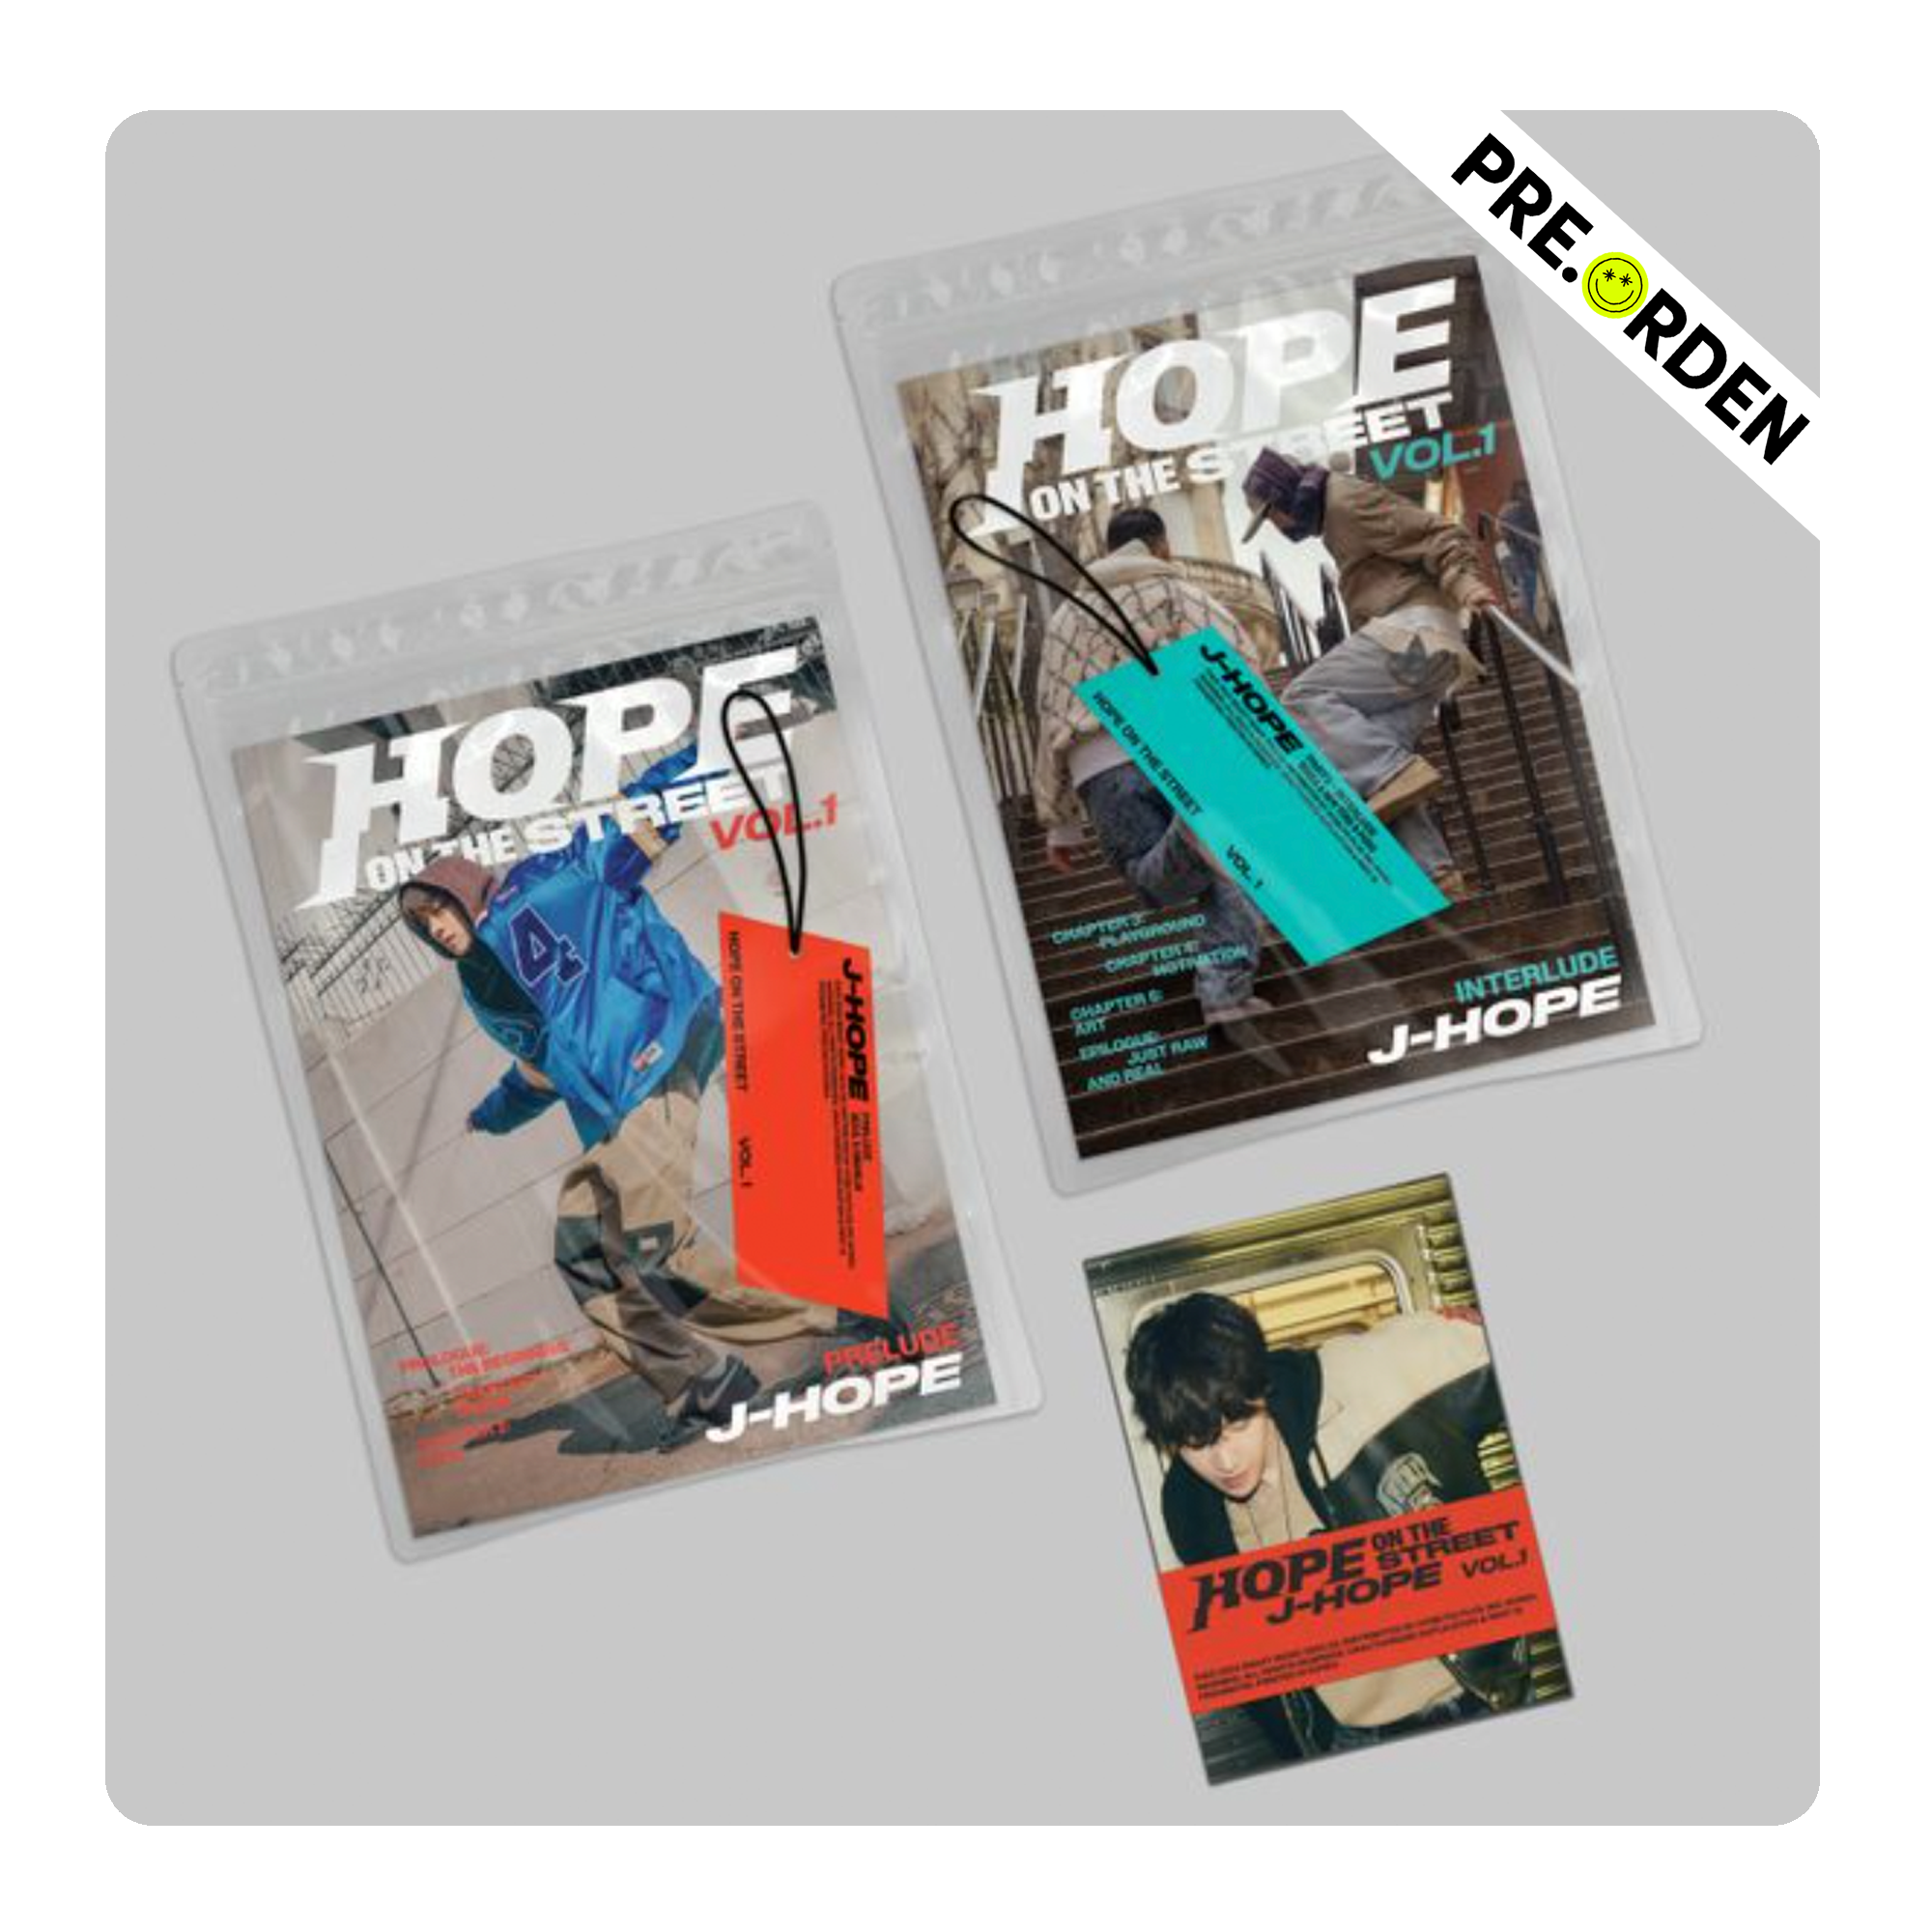 BTS : J-hope - Hope on The Street Vol.1 (Early Bird Edition)